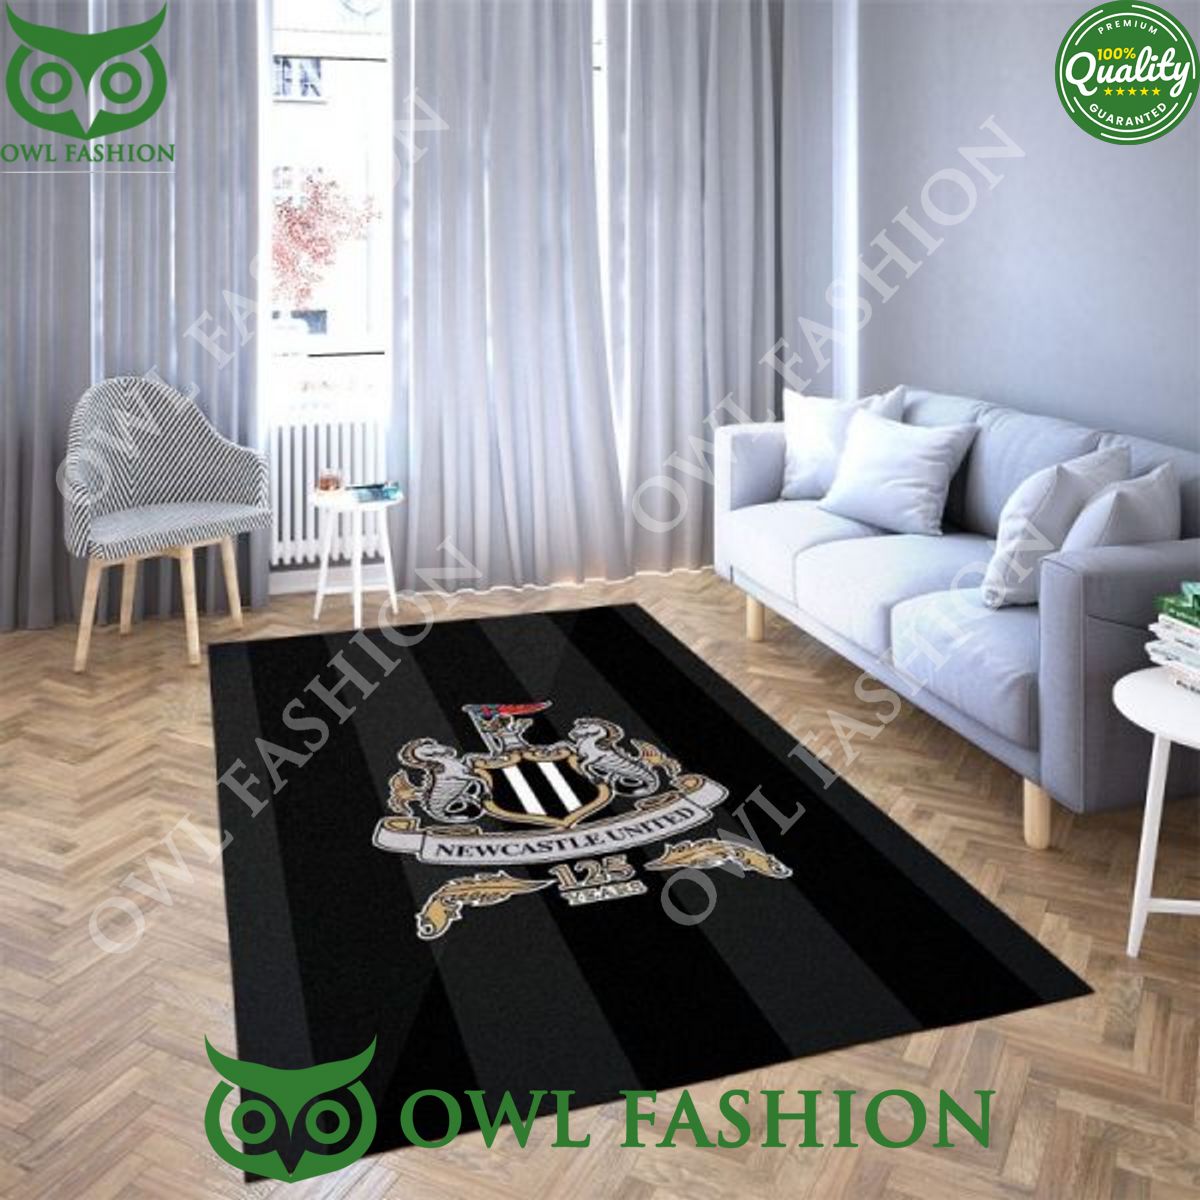 Living Room Newcastle United Football Club Carpet Rug